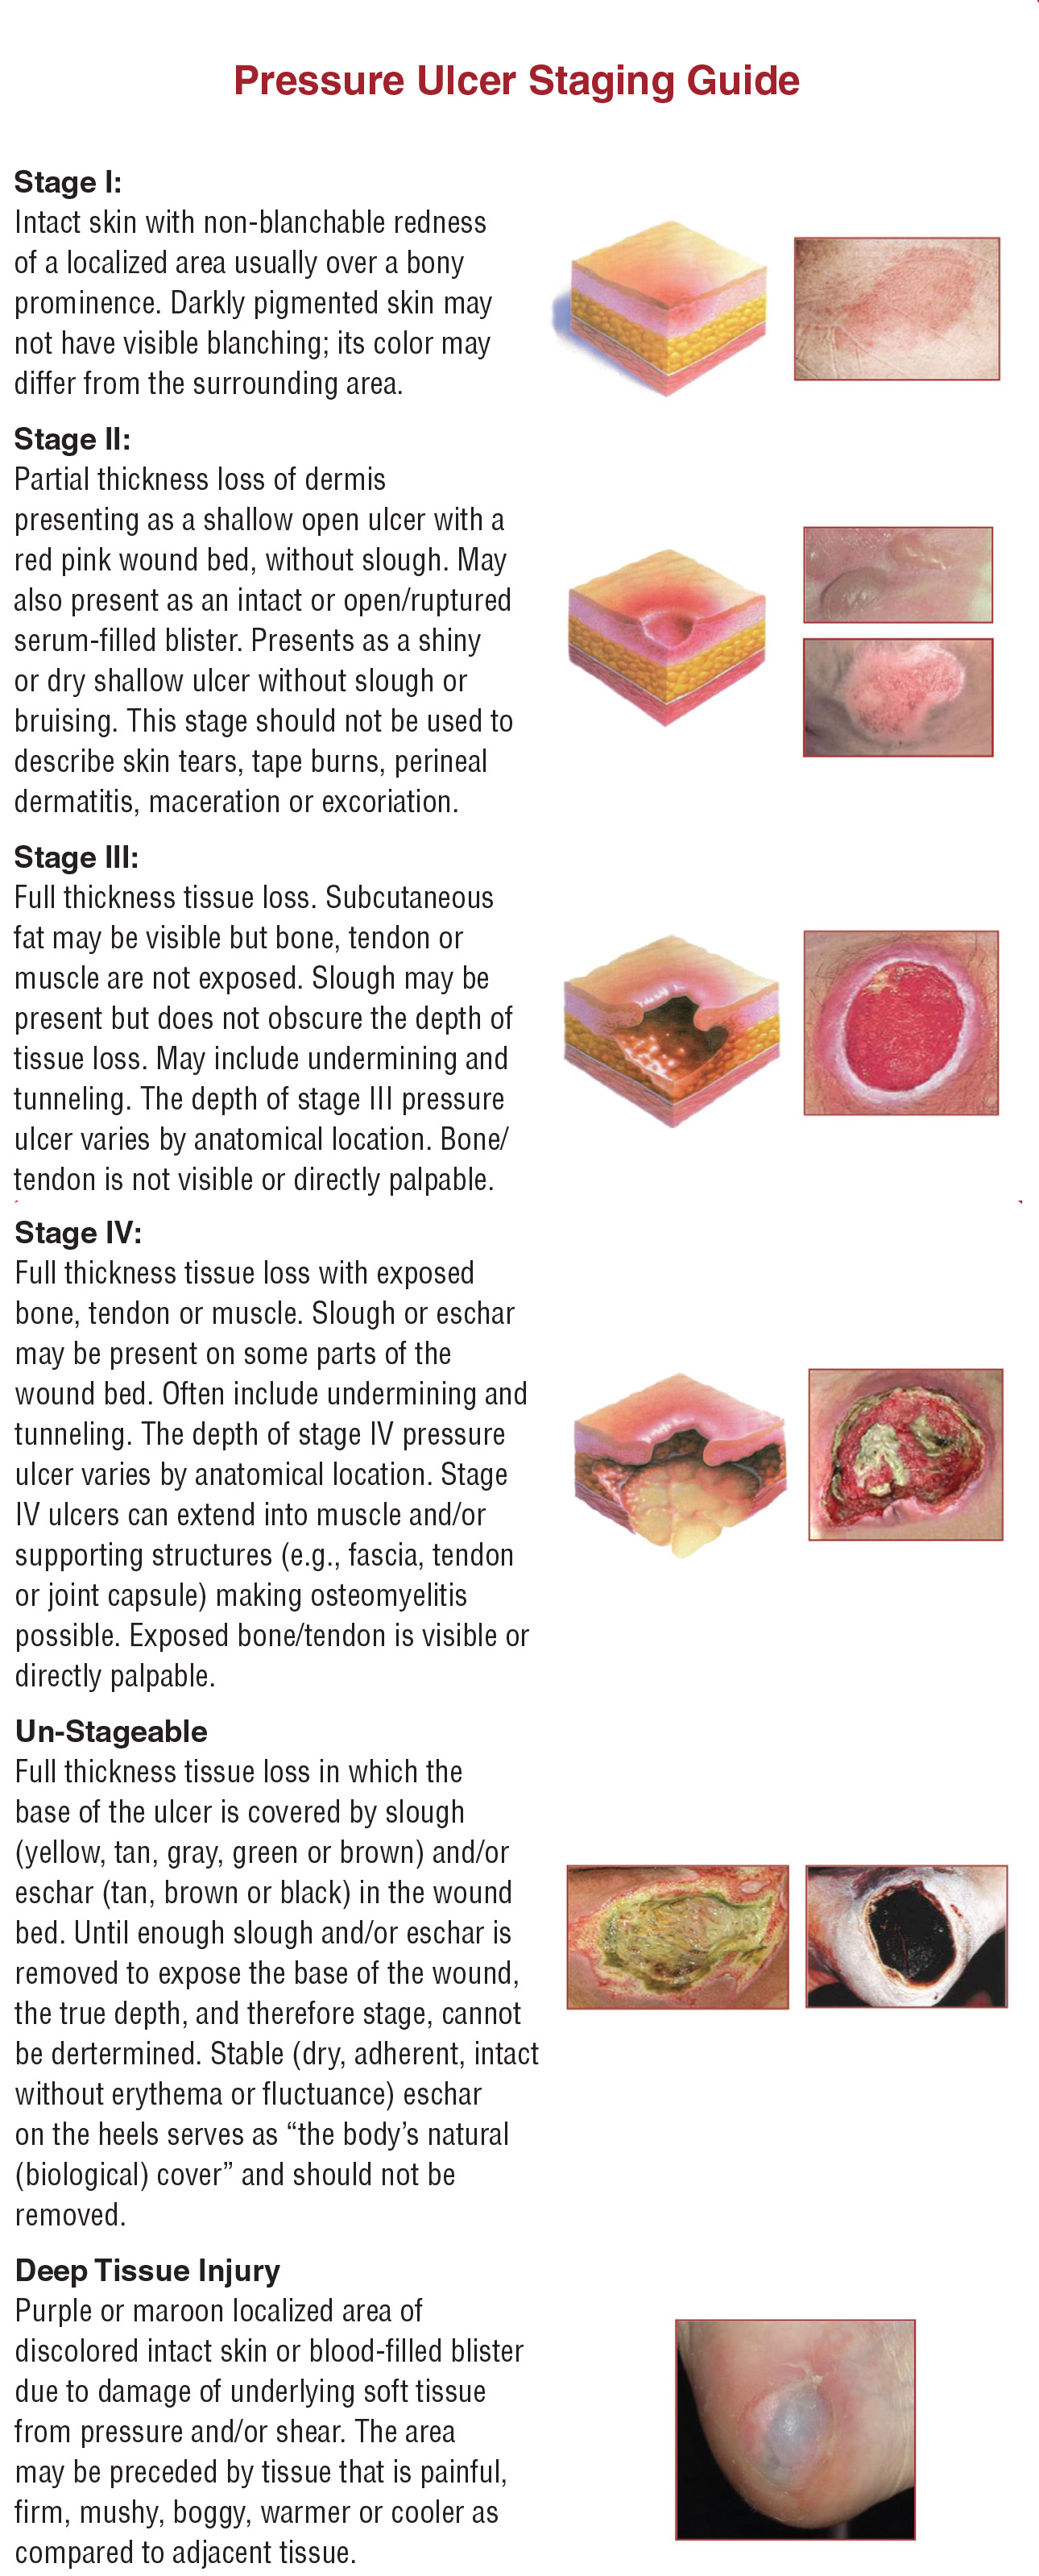 Pressure Ulcer Sites Diagram